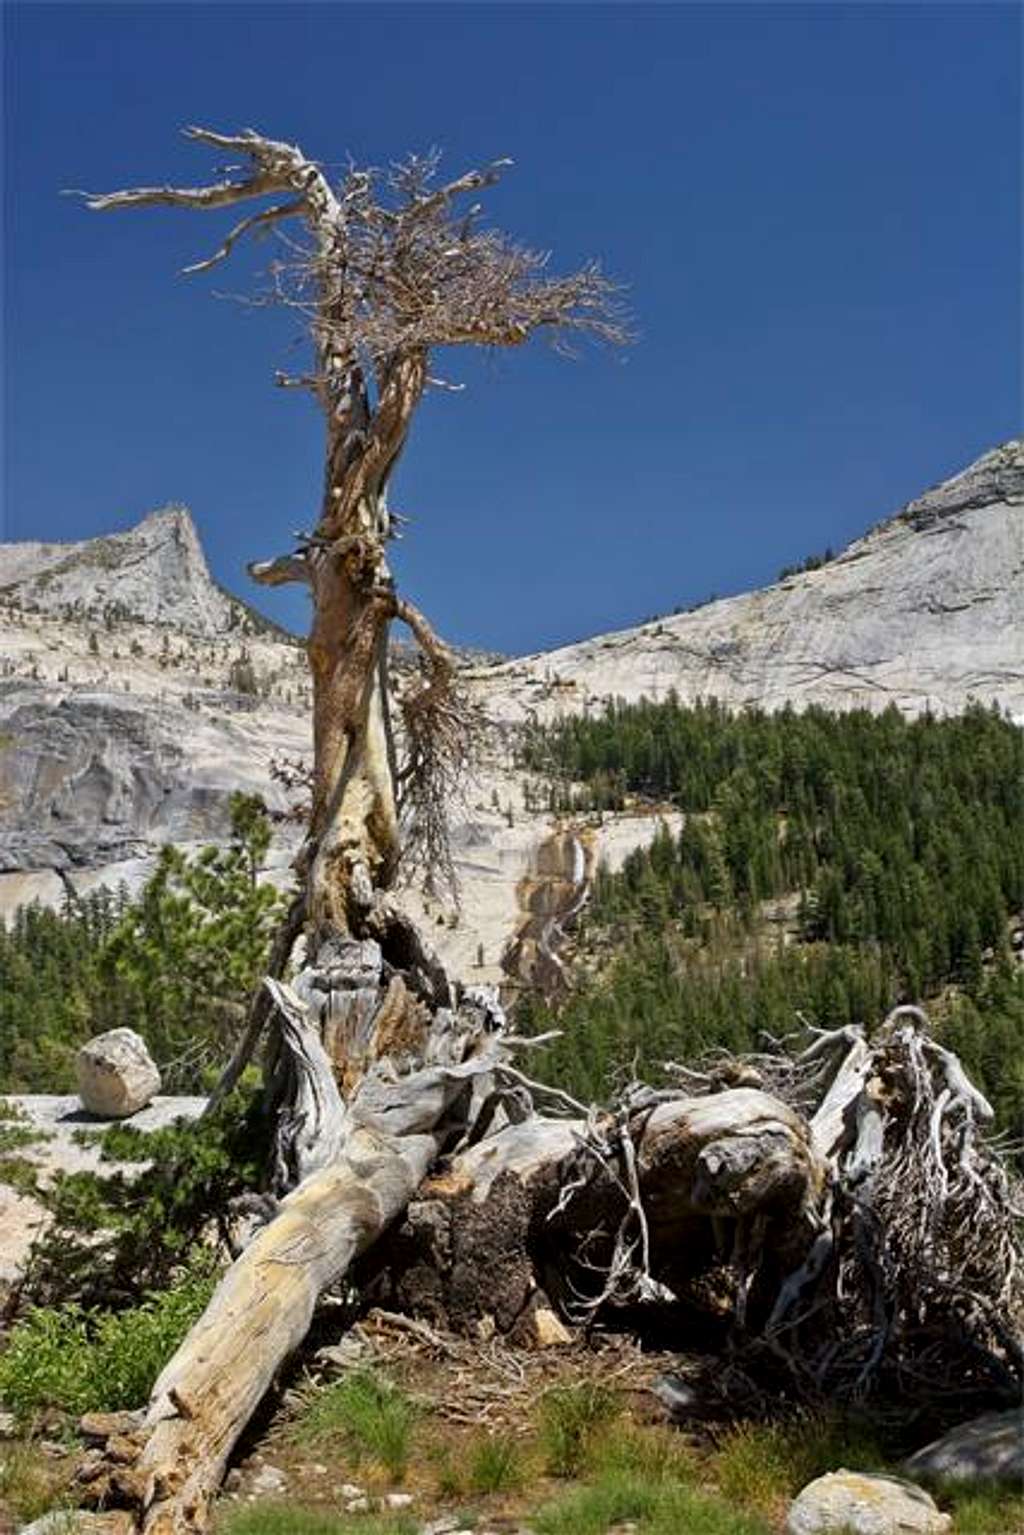 A wicked tree near the summit...